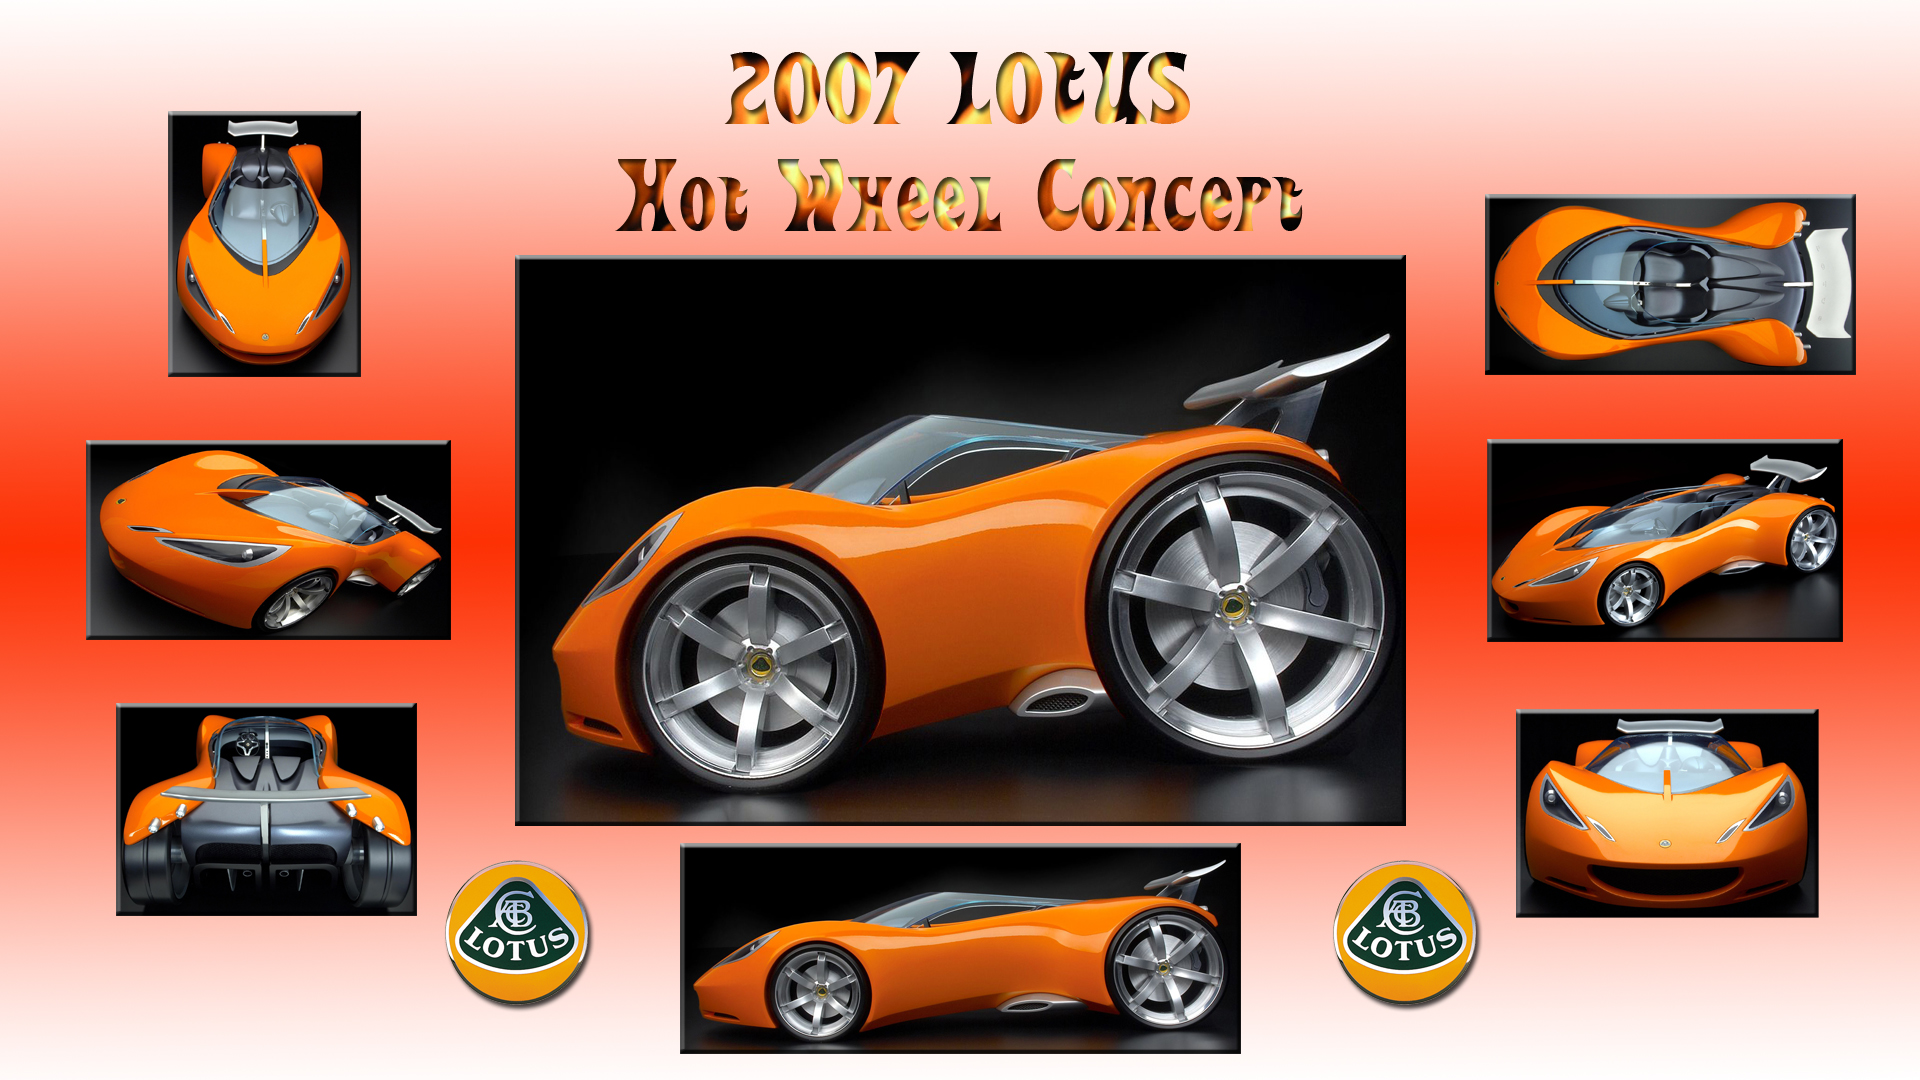 Lotus Hot Wheels Concept #9